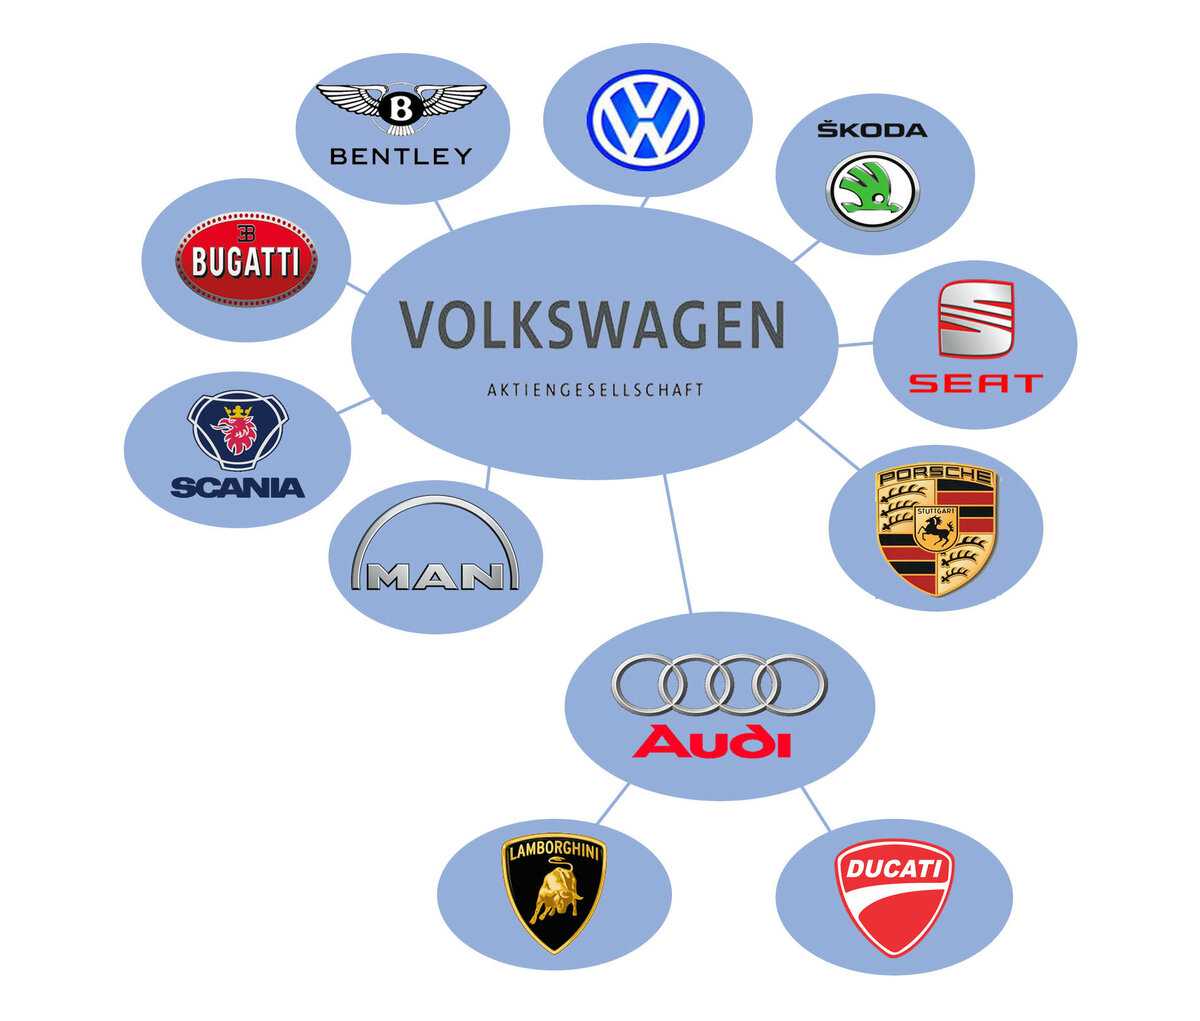 Производители автомобилей в мире. Производители автомобилей. Концерны автомобилей. Концерны и марки автомобилей. Кому принадлежат автомобильные бренды.